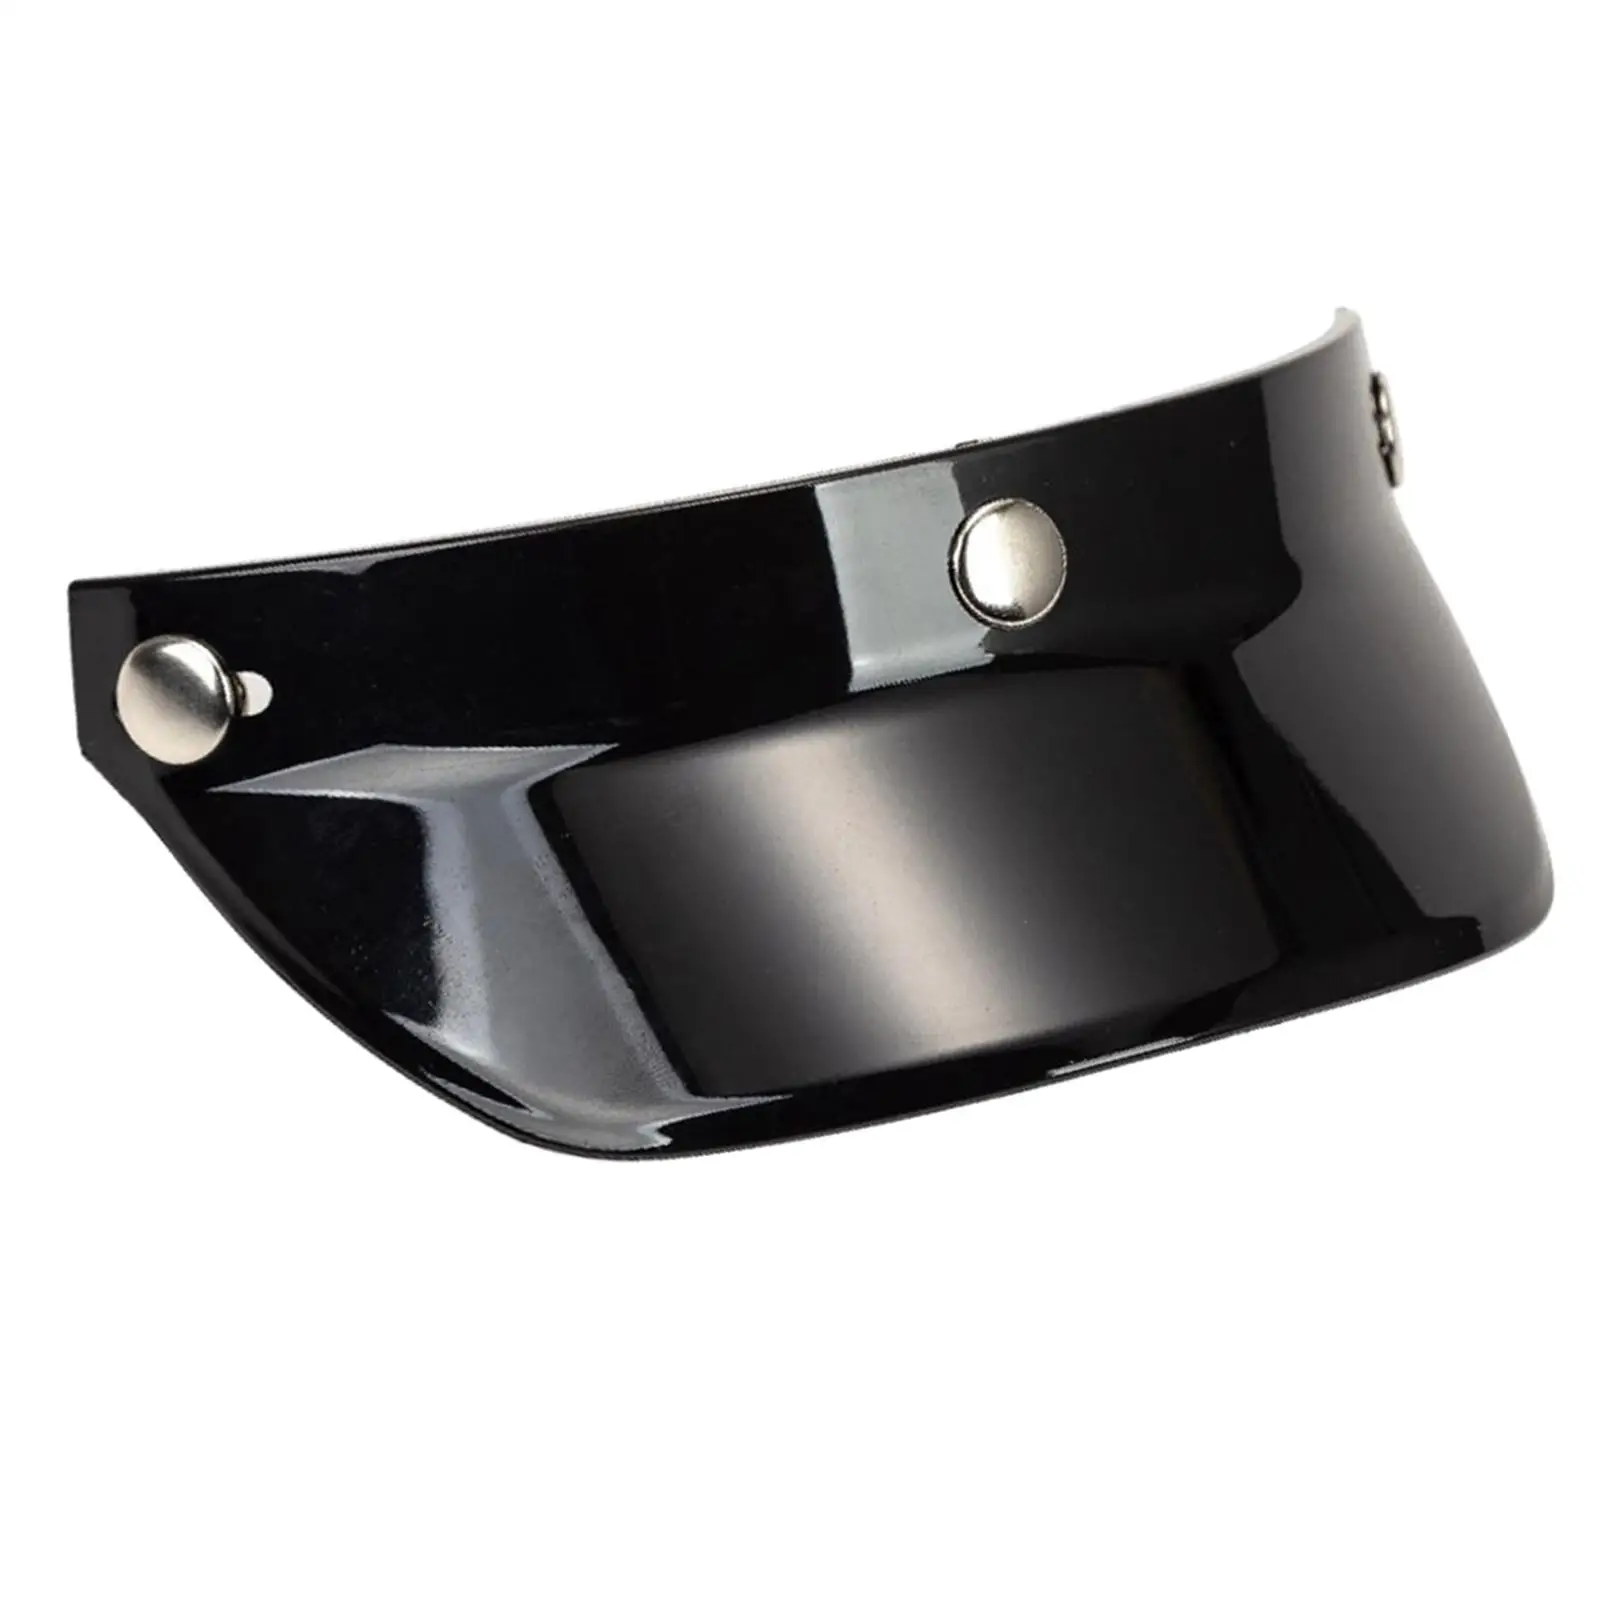 2X Motorcycle Peak Shield for 3 Snap Scratch Resistant for 3/4 Helmets Black